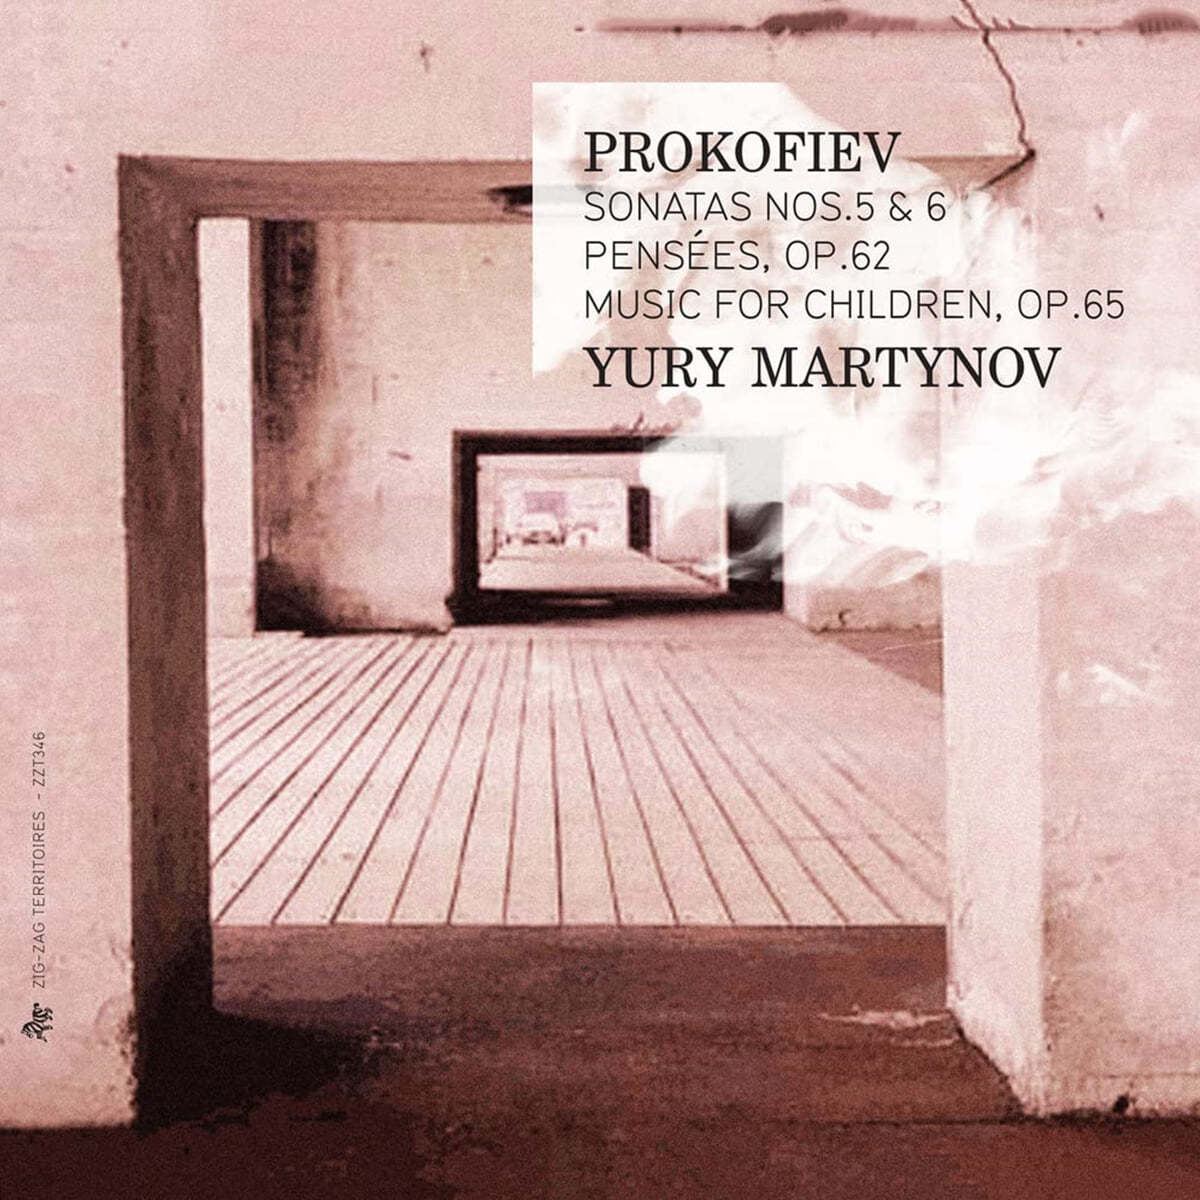 Yury Martynov 프로코피에프: 피아노 소나타 5, 6번 - 유리 마르티노프 (Prokofiev: Sonatas Nos. 5, 6) 